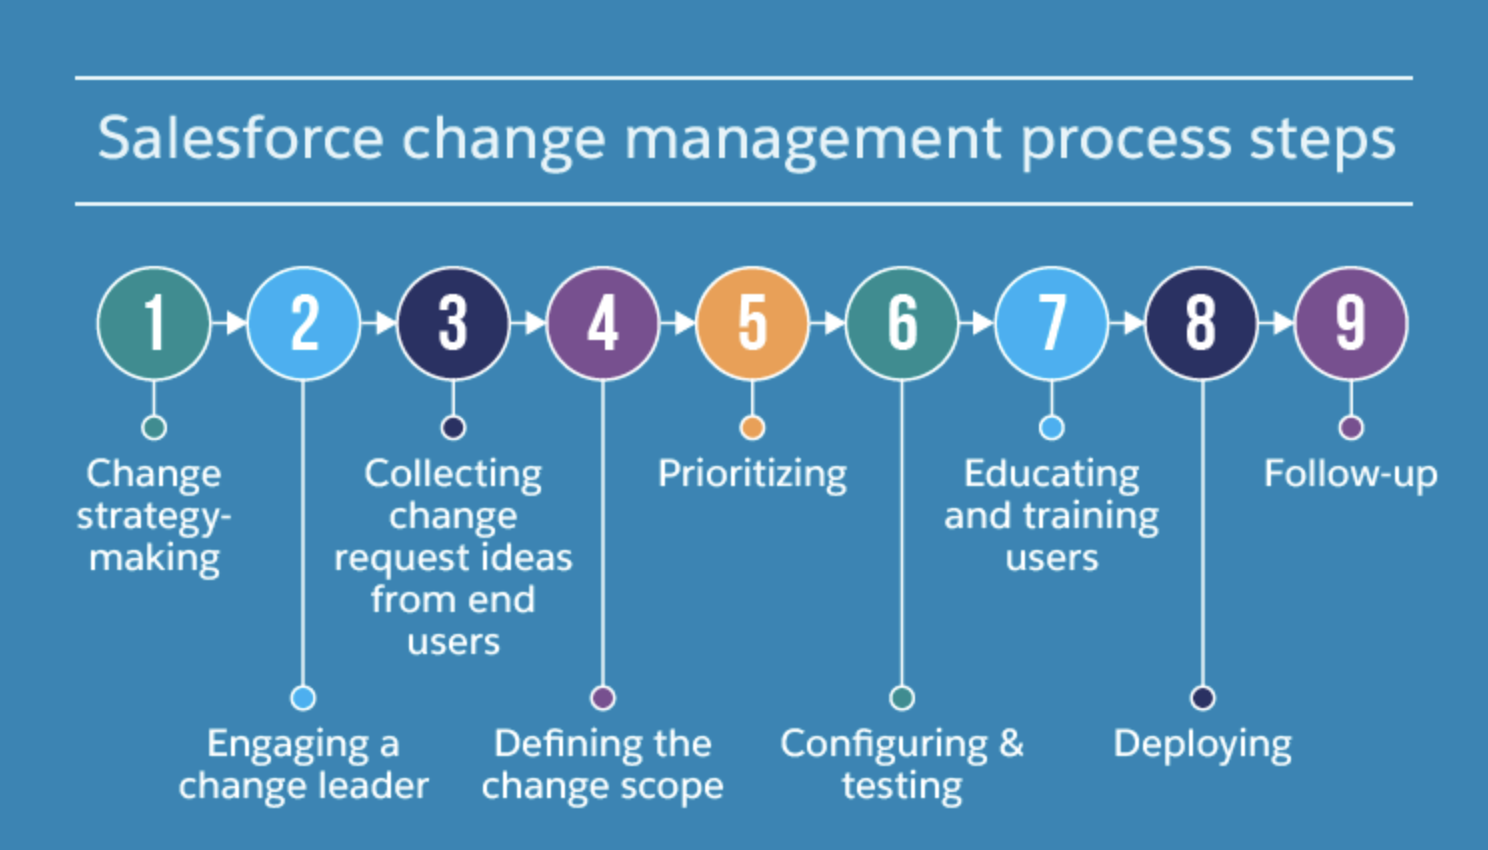 Salesforce change management process steps